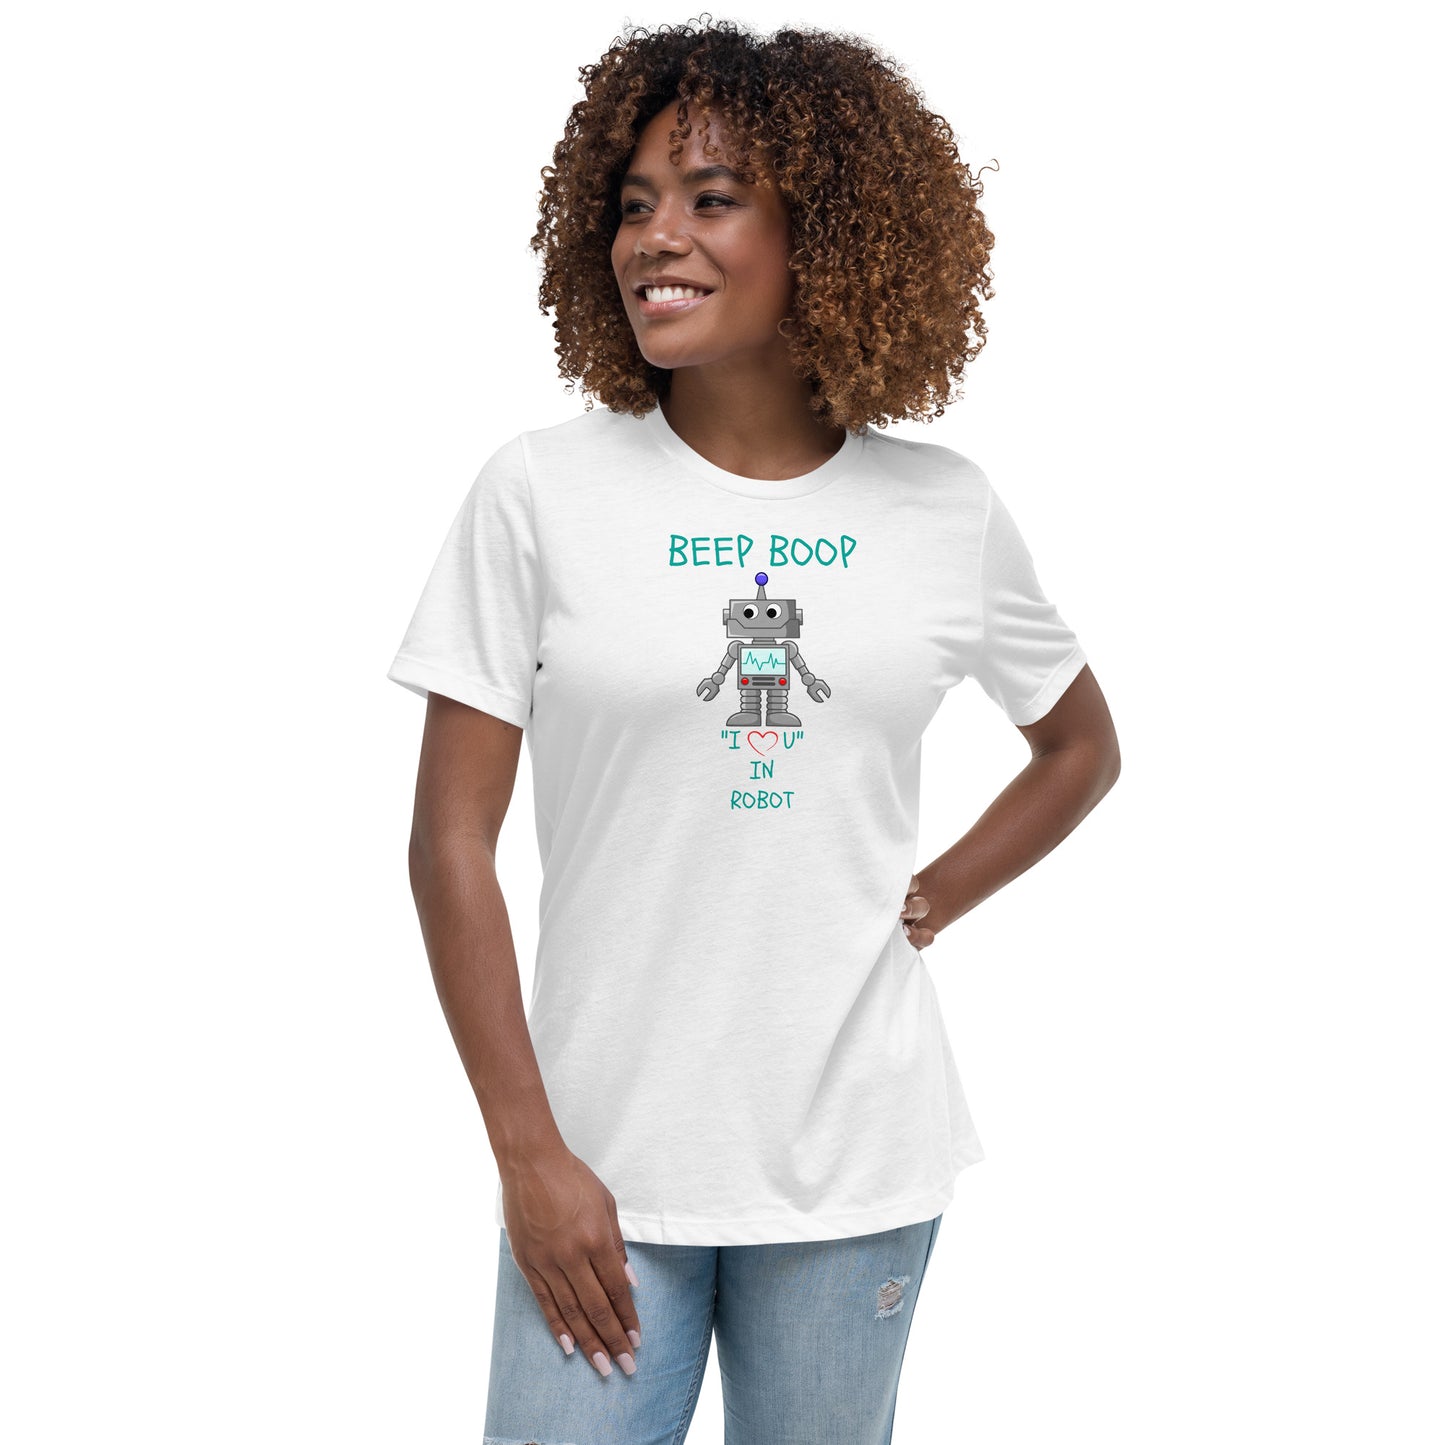 BEEP BOOP "I LOVE U" IN ROBOT Women's Relaxed T-Shirt